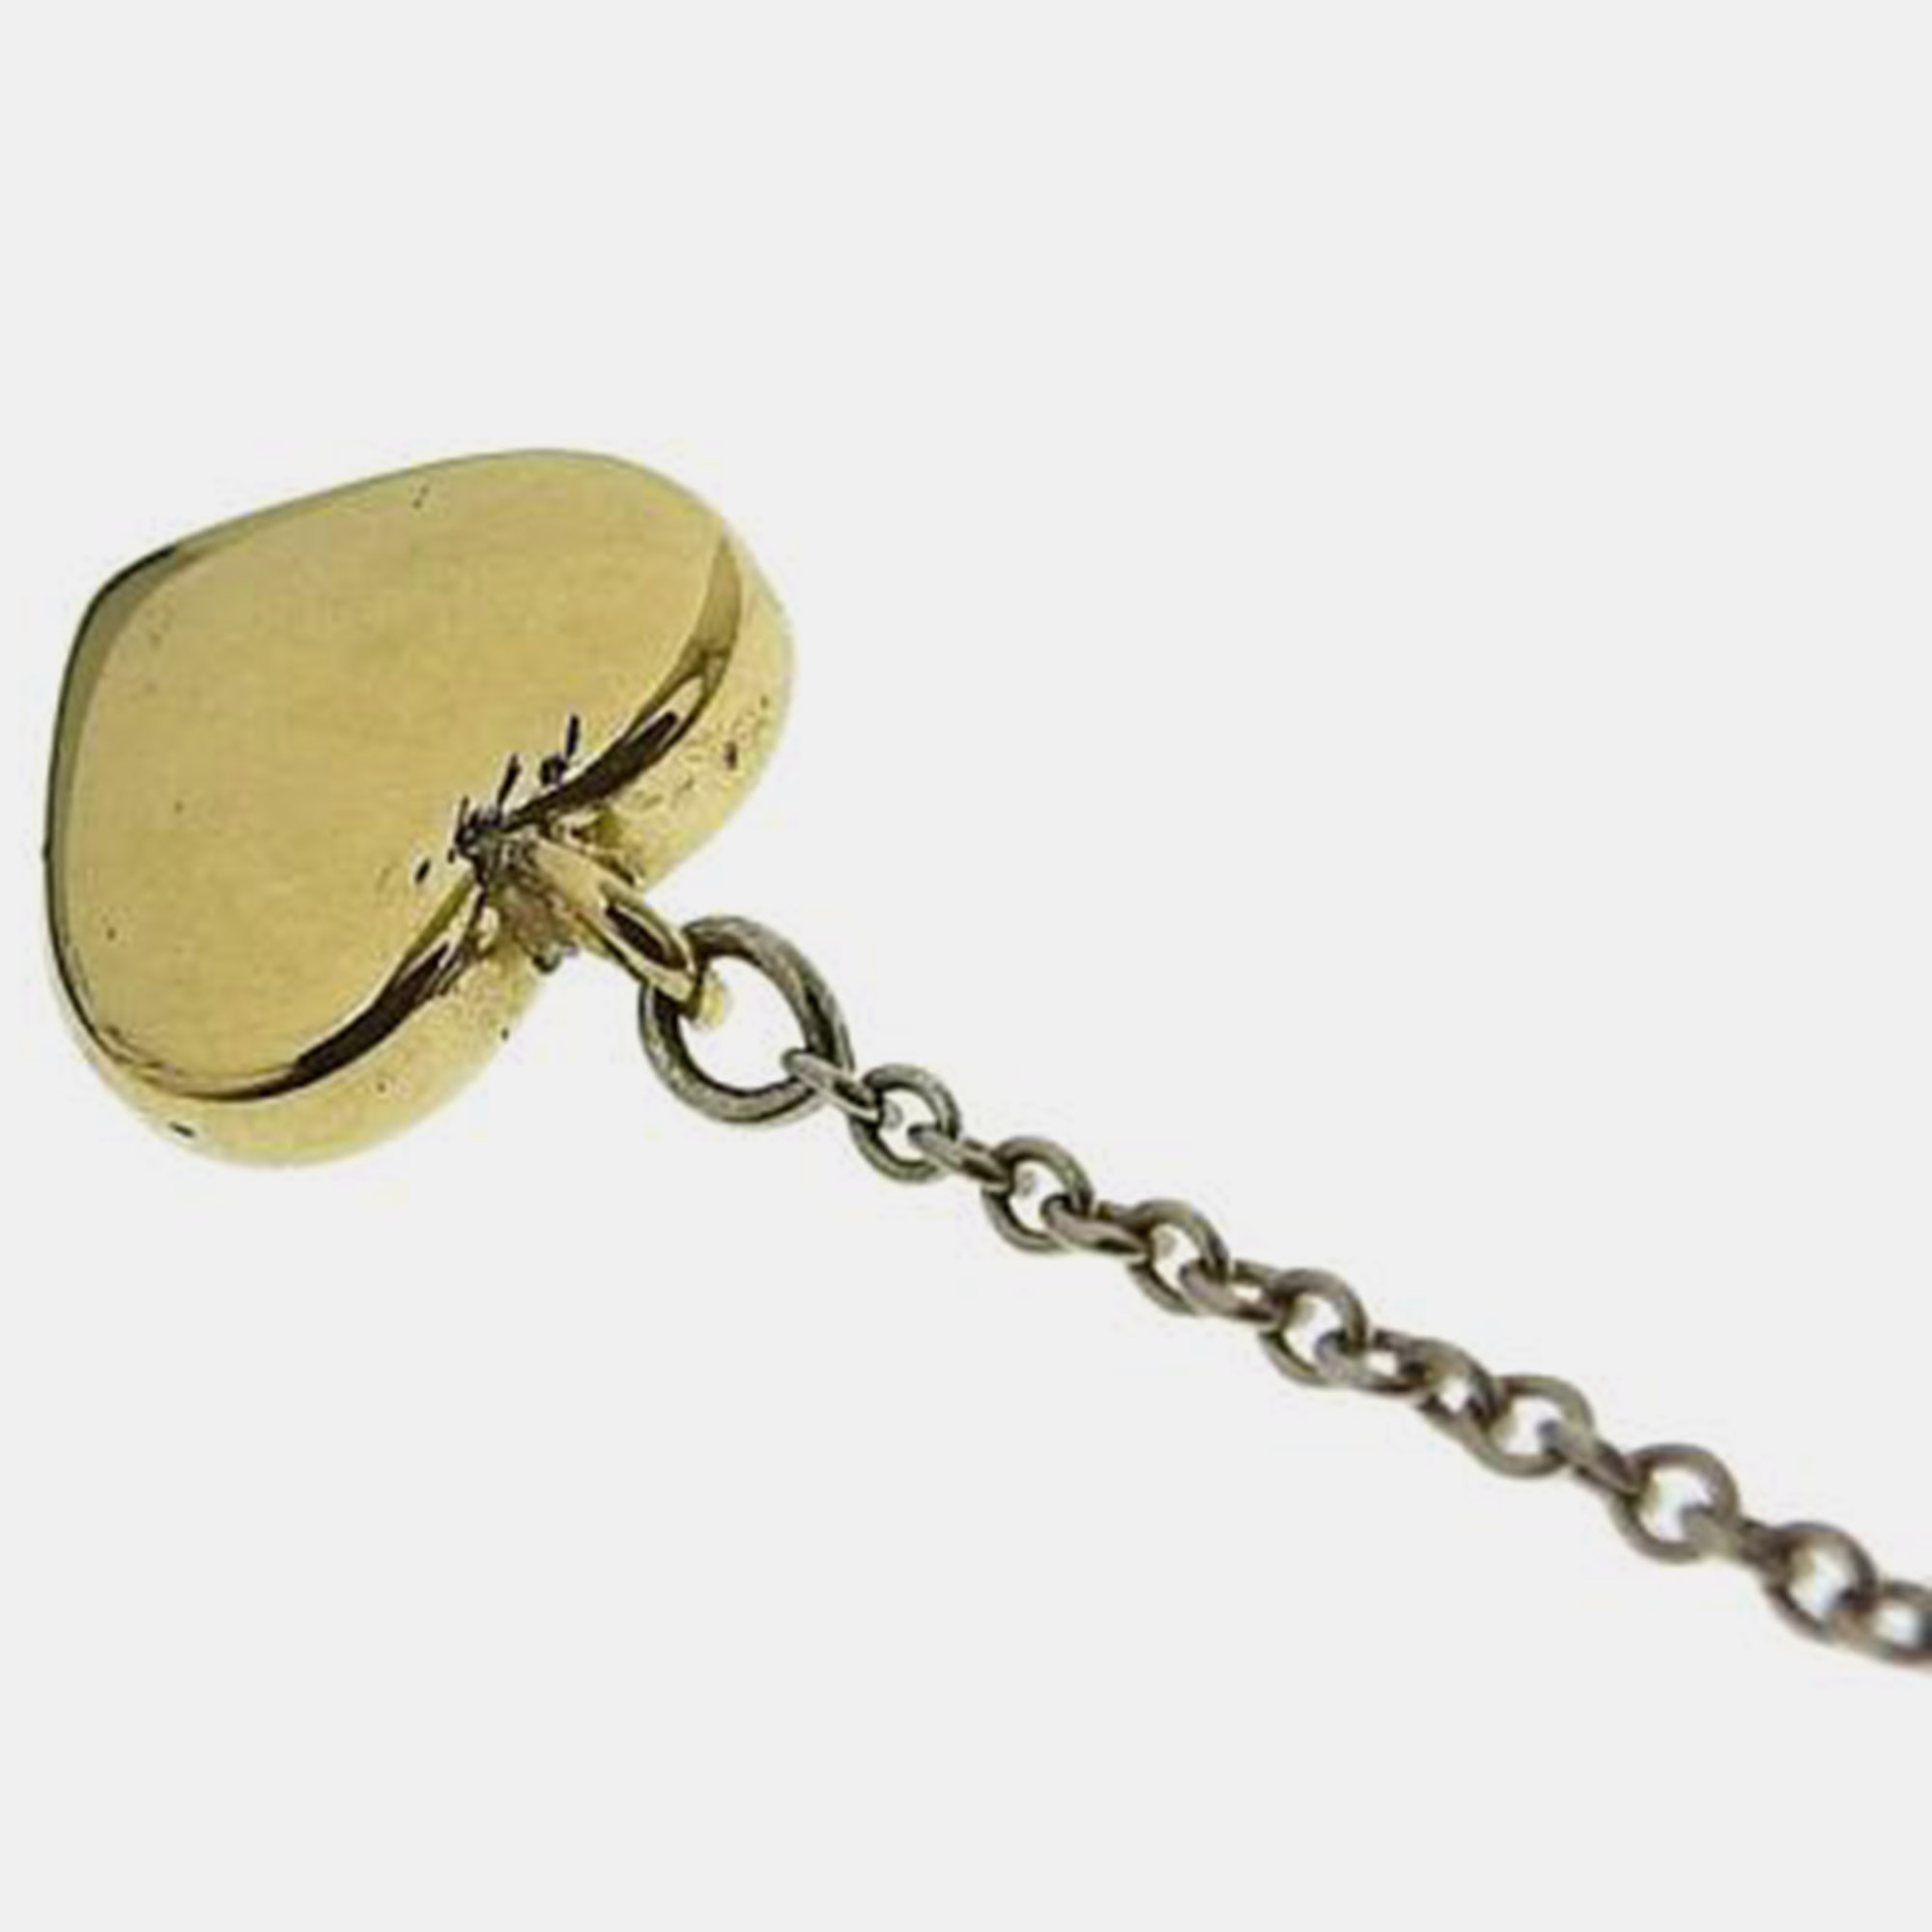 Tiffany & Co. Heart 18K Yellow Gold Necklace